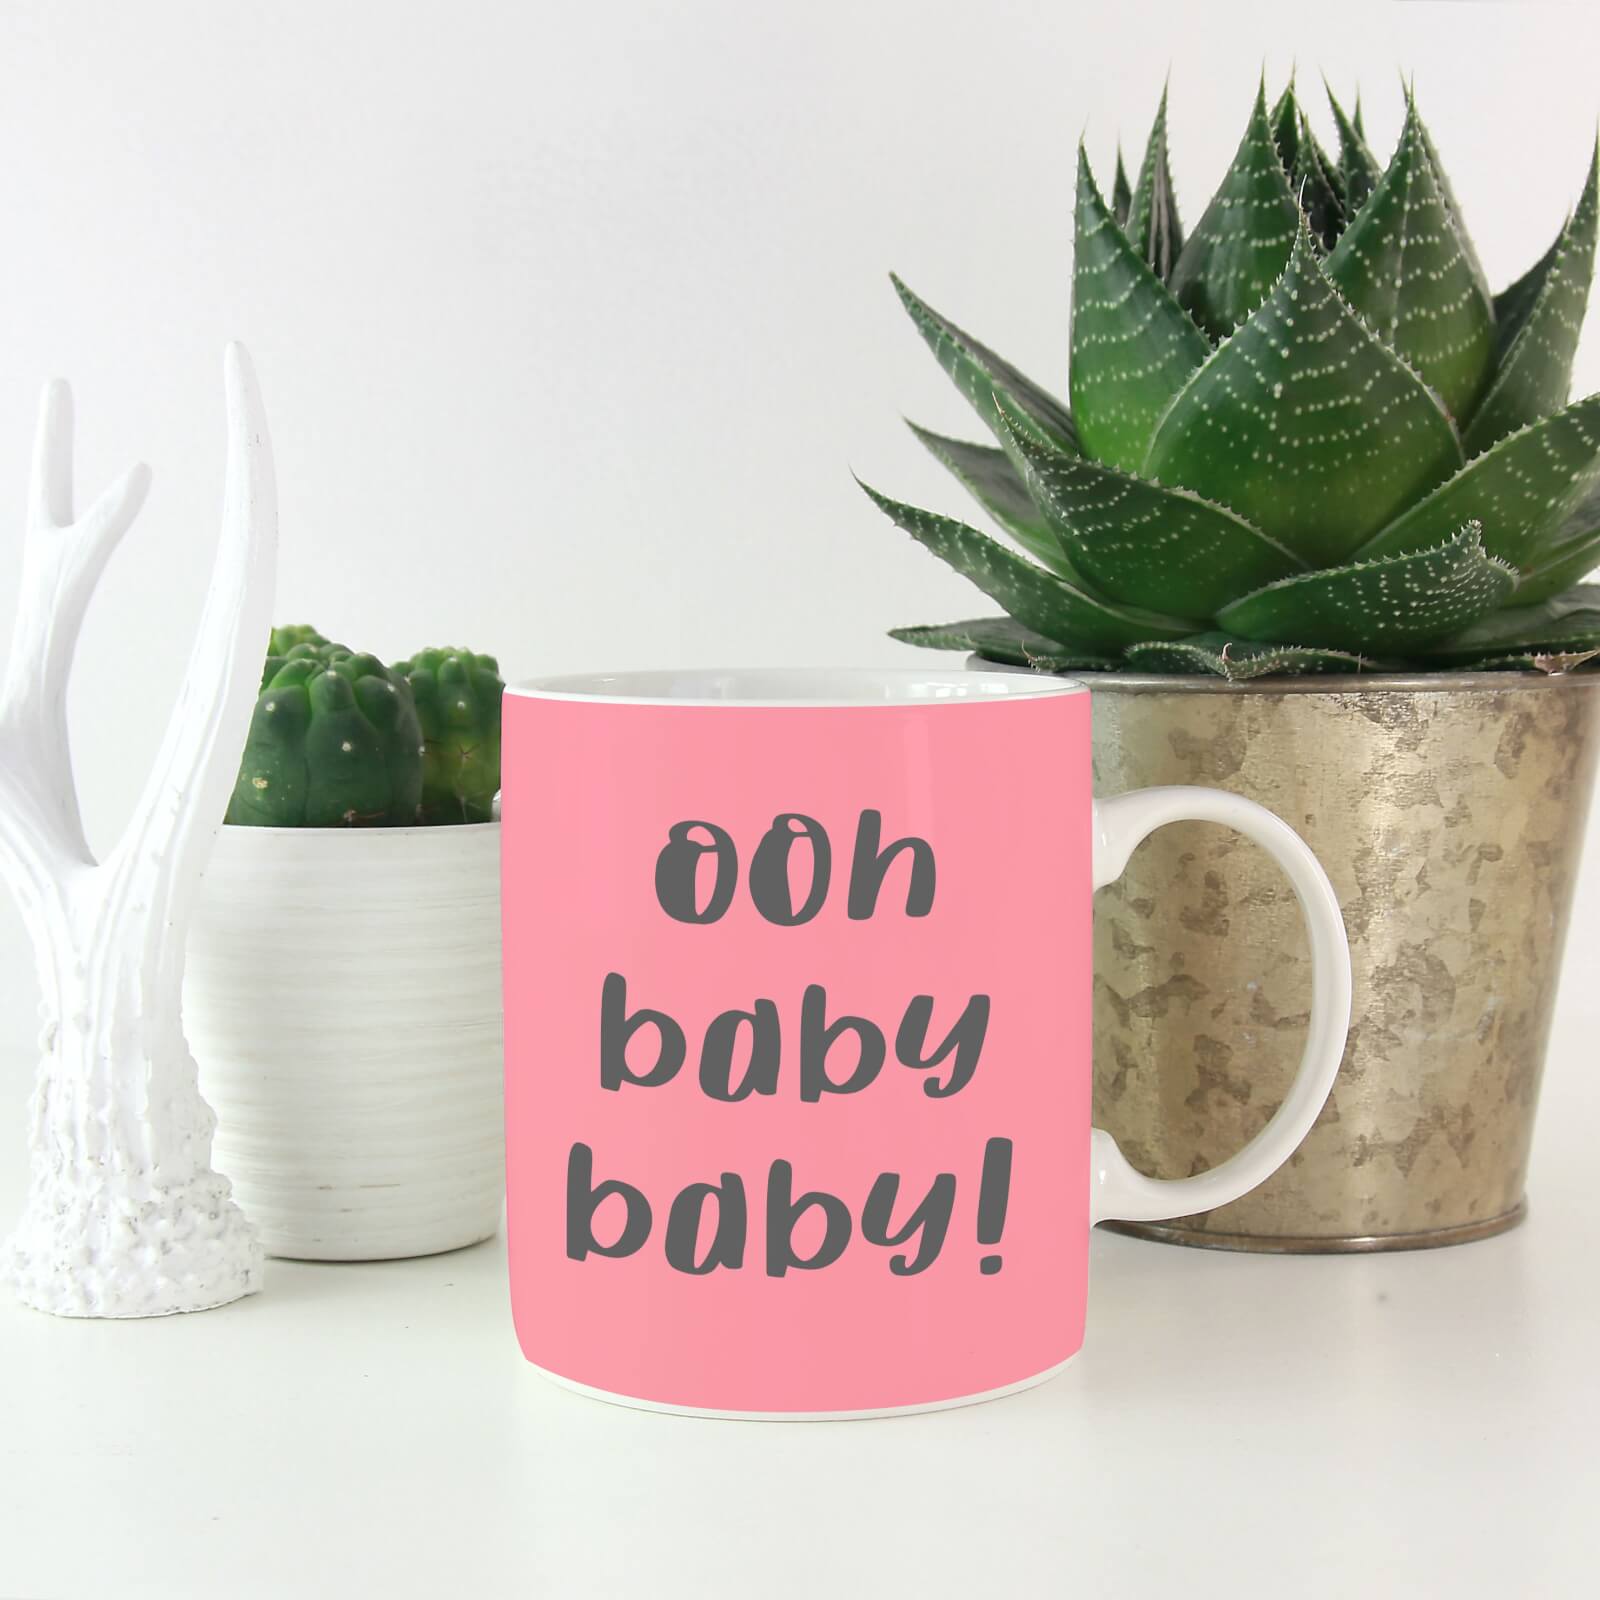 Ooh Baby Baby Mug